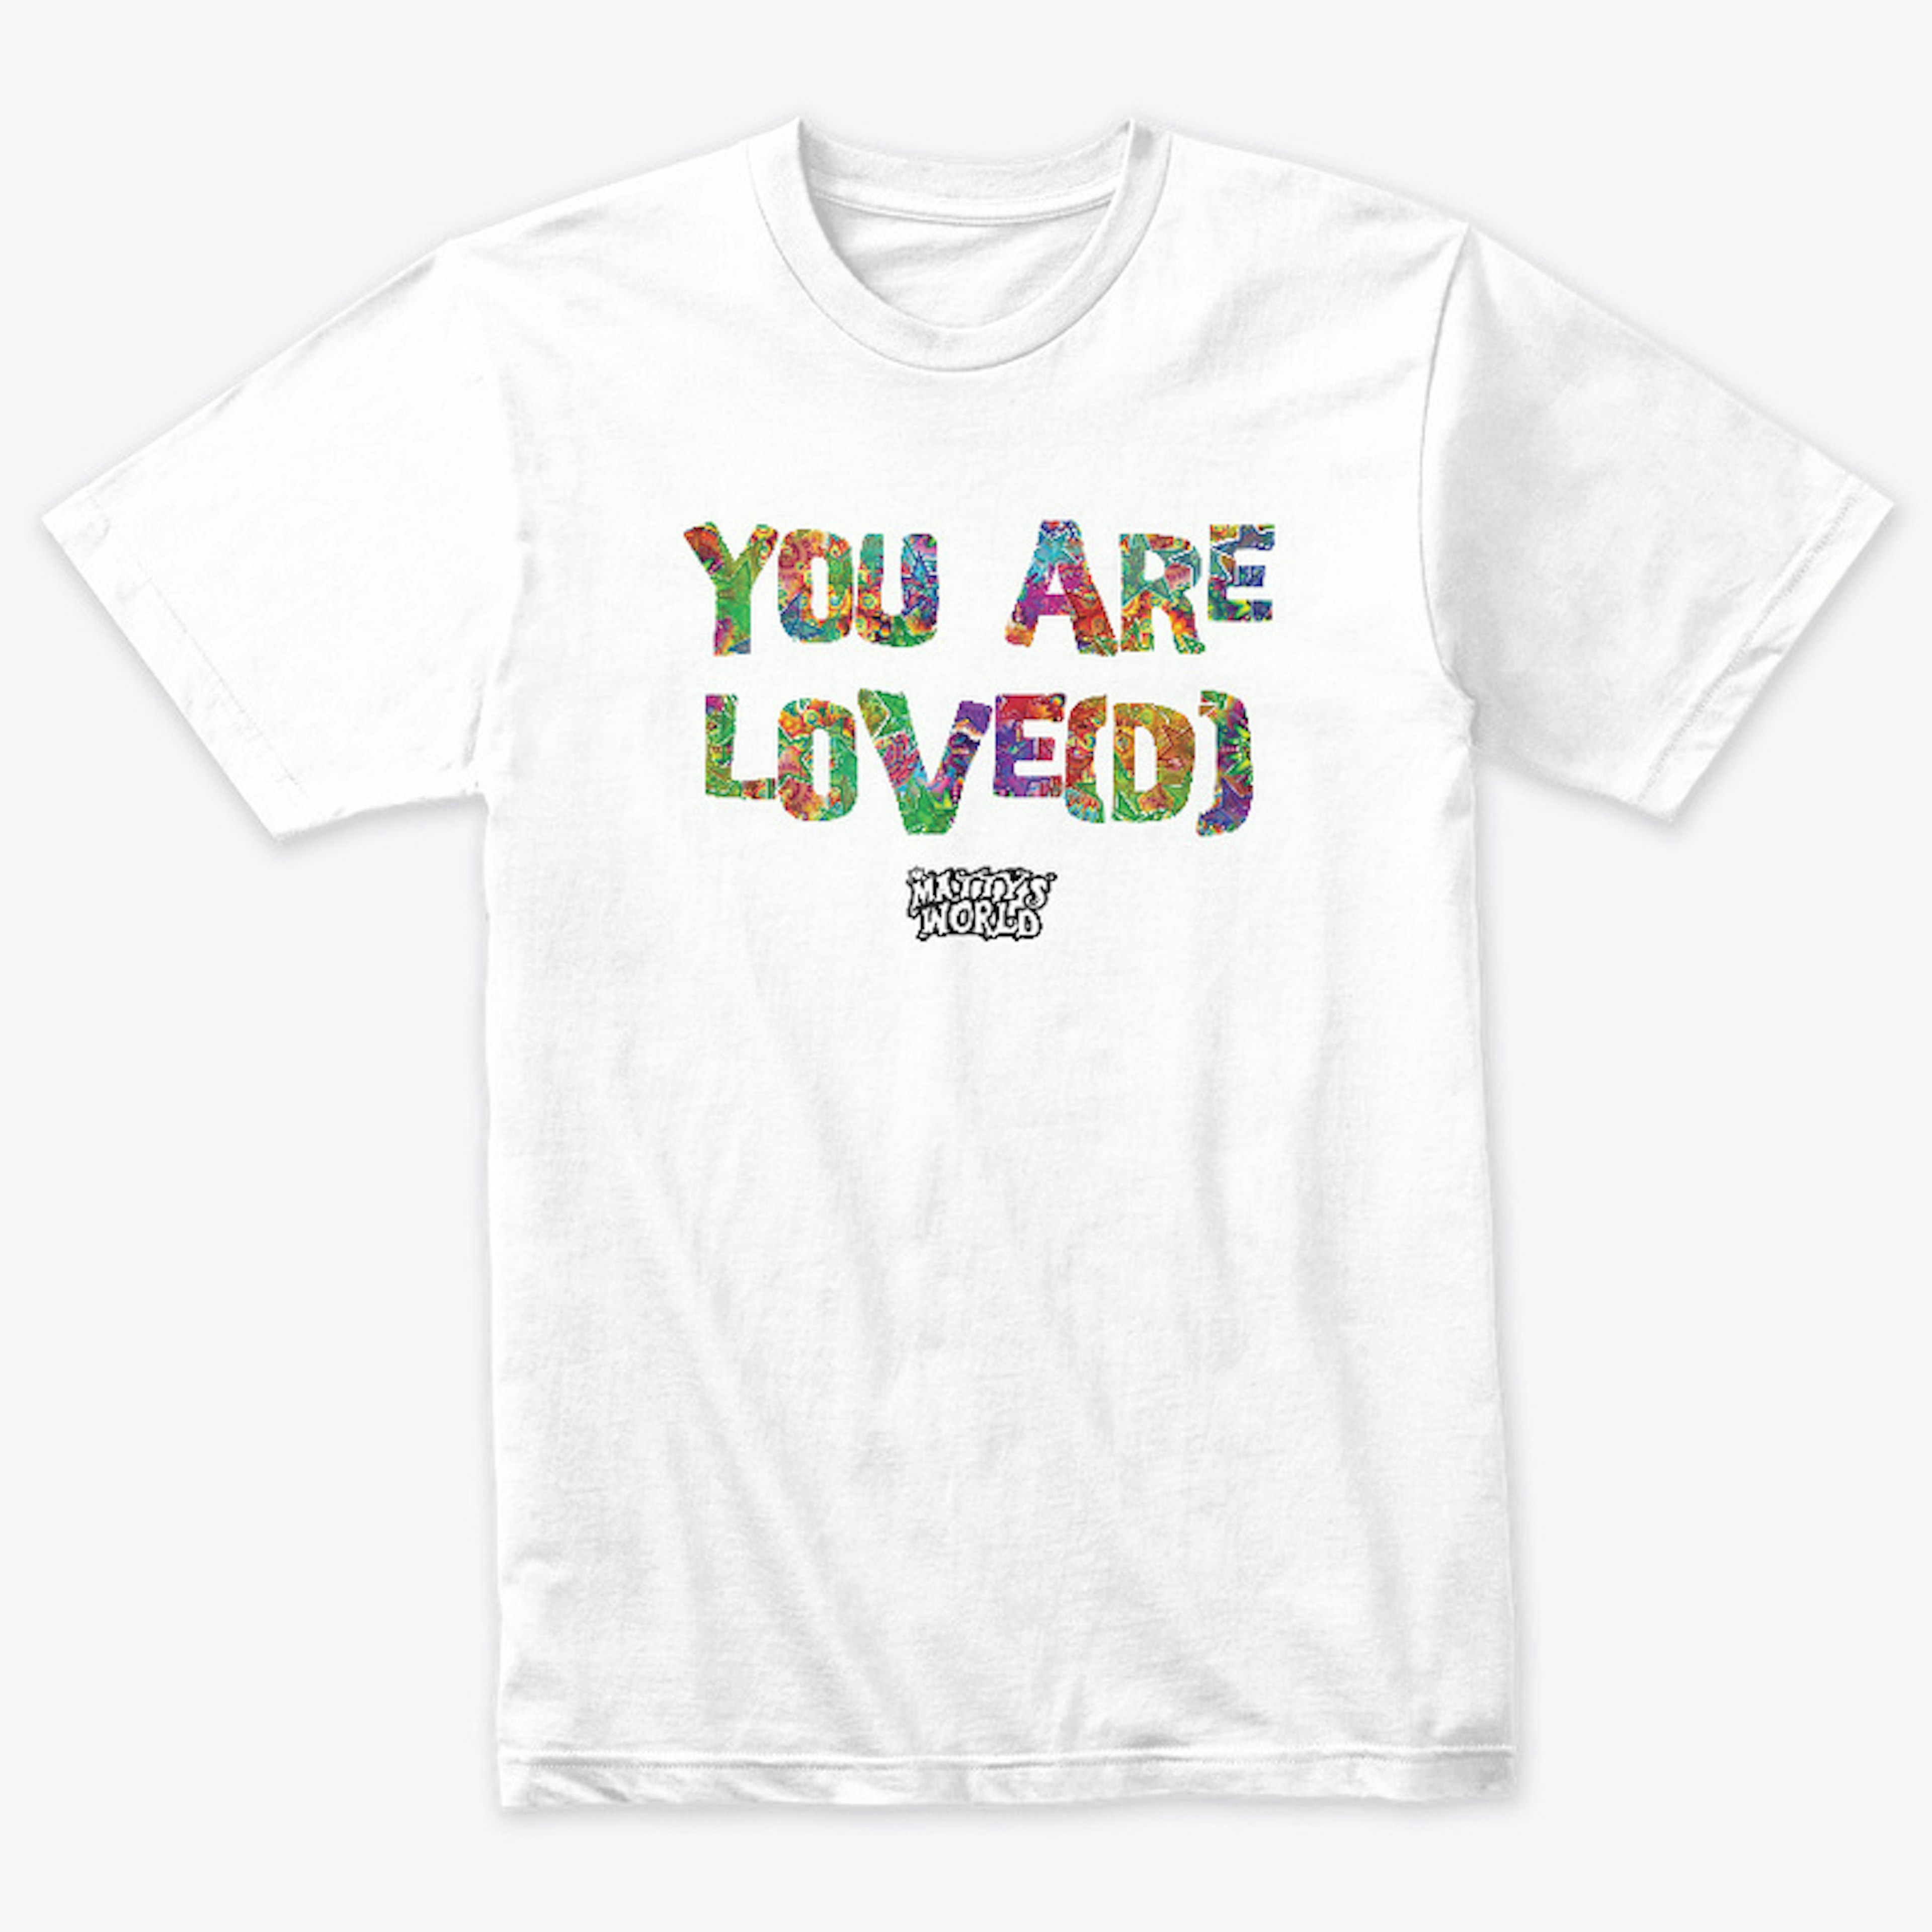 You Are Love(d) - Rainbow Stars